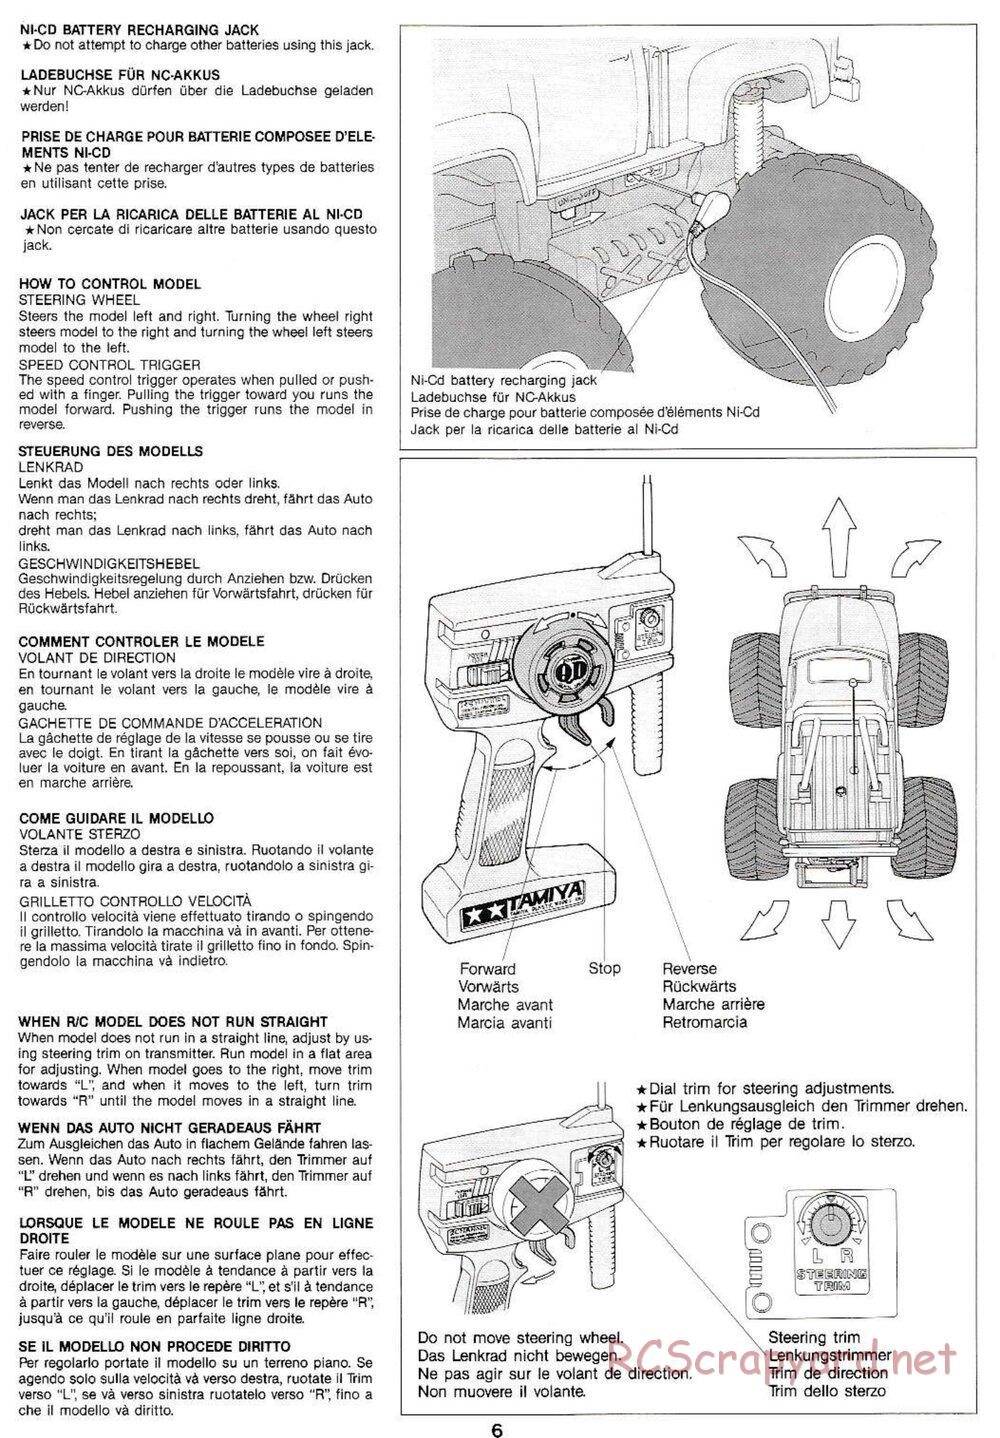 Tamiya - Midnight Pumpkin QD Chassis - Manual - Page 6